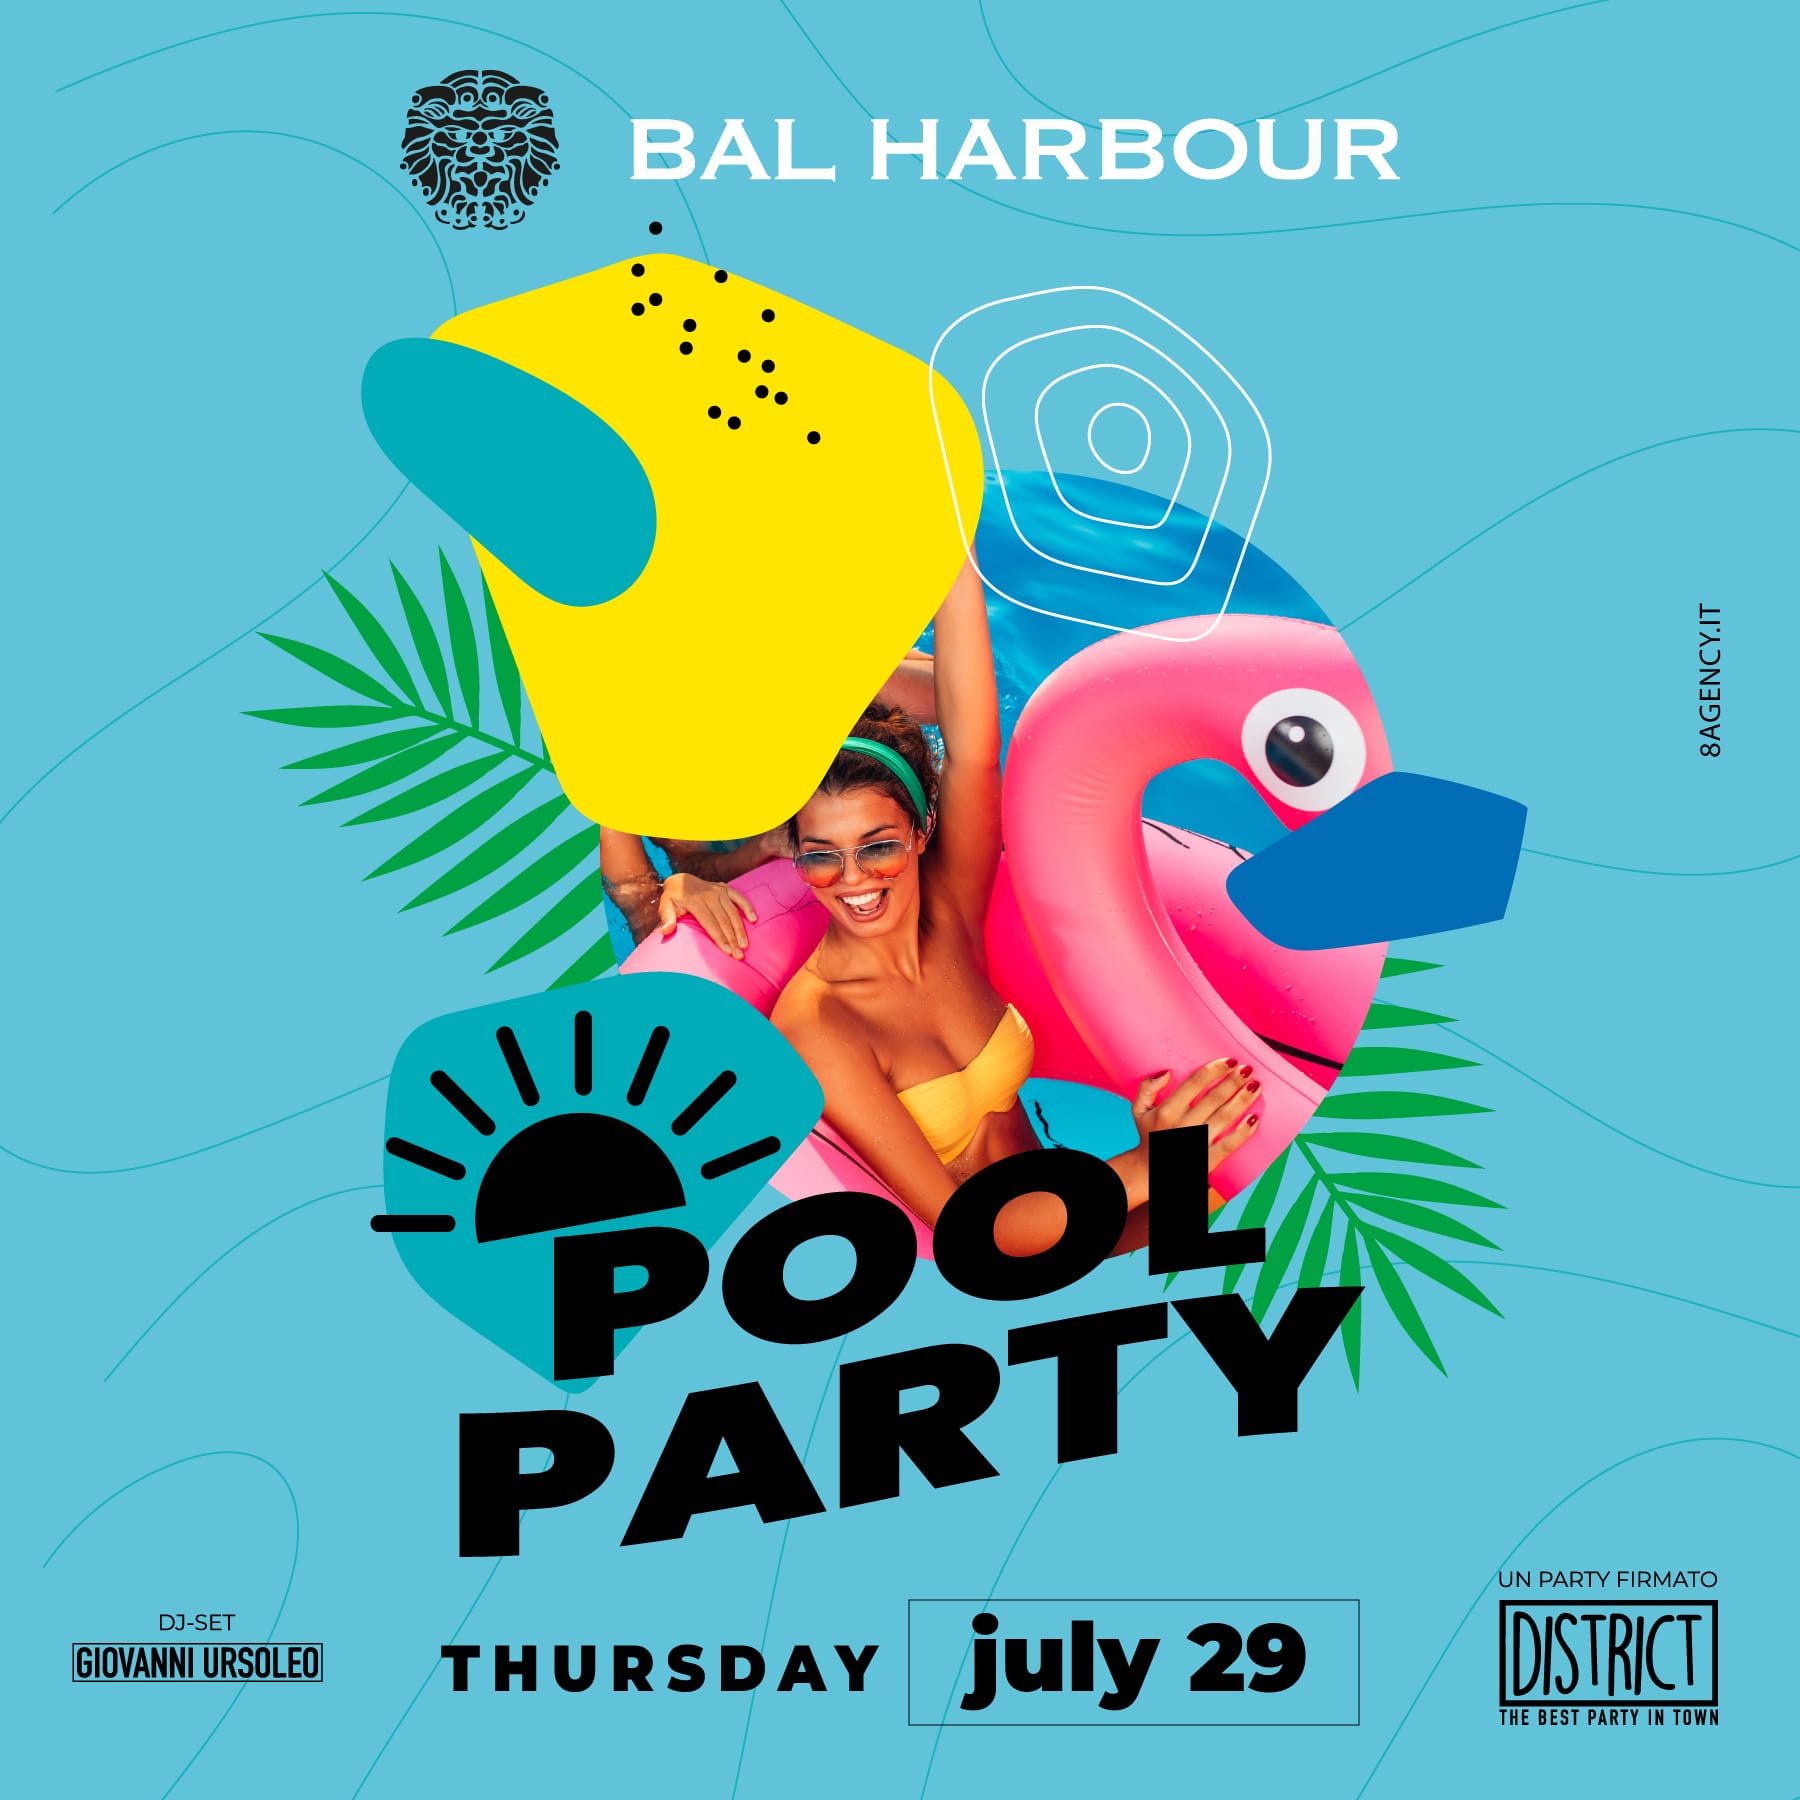 Pool Party in Piscina San Teodoro Giovedì 29 Luglio 2021 - Bal Harbour